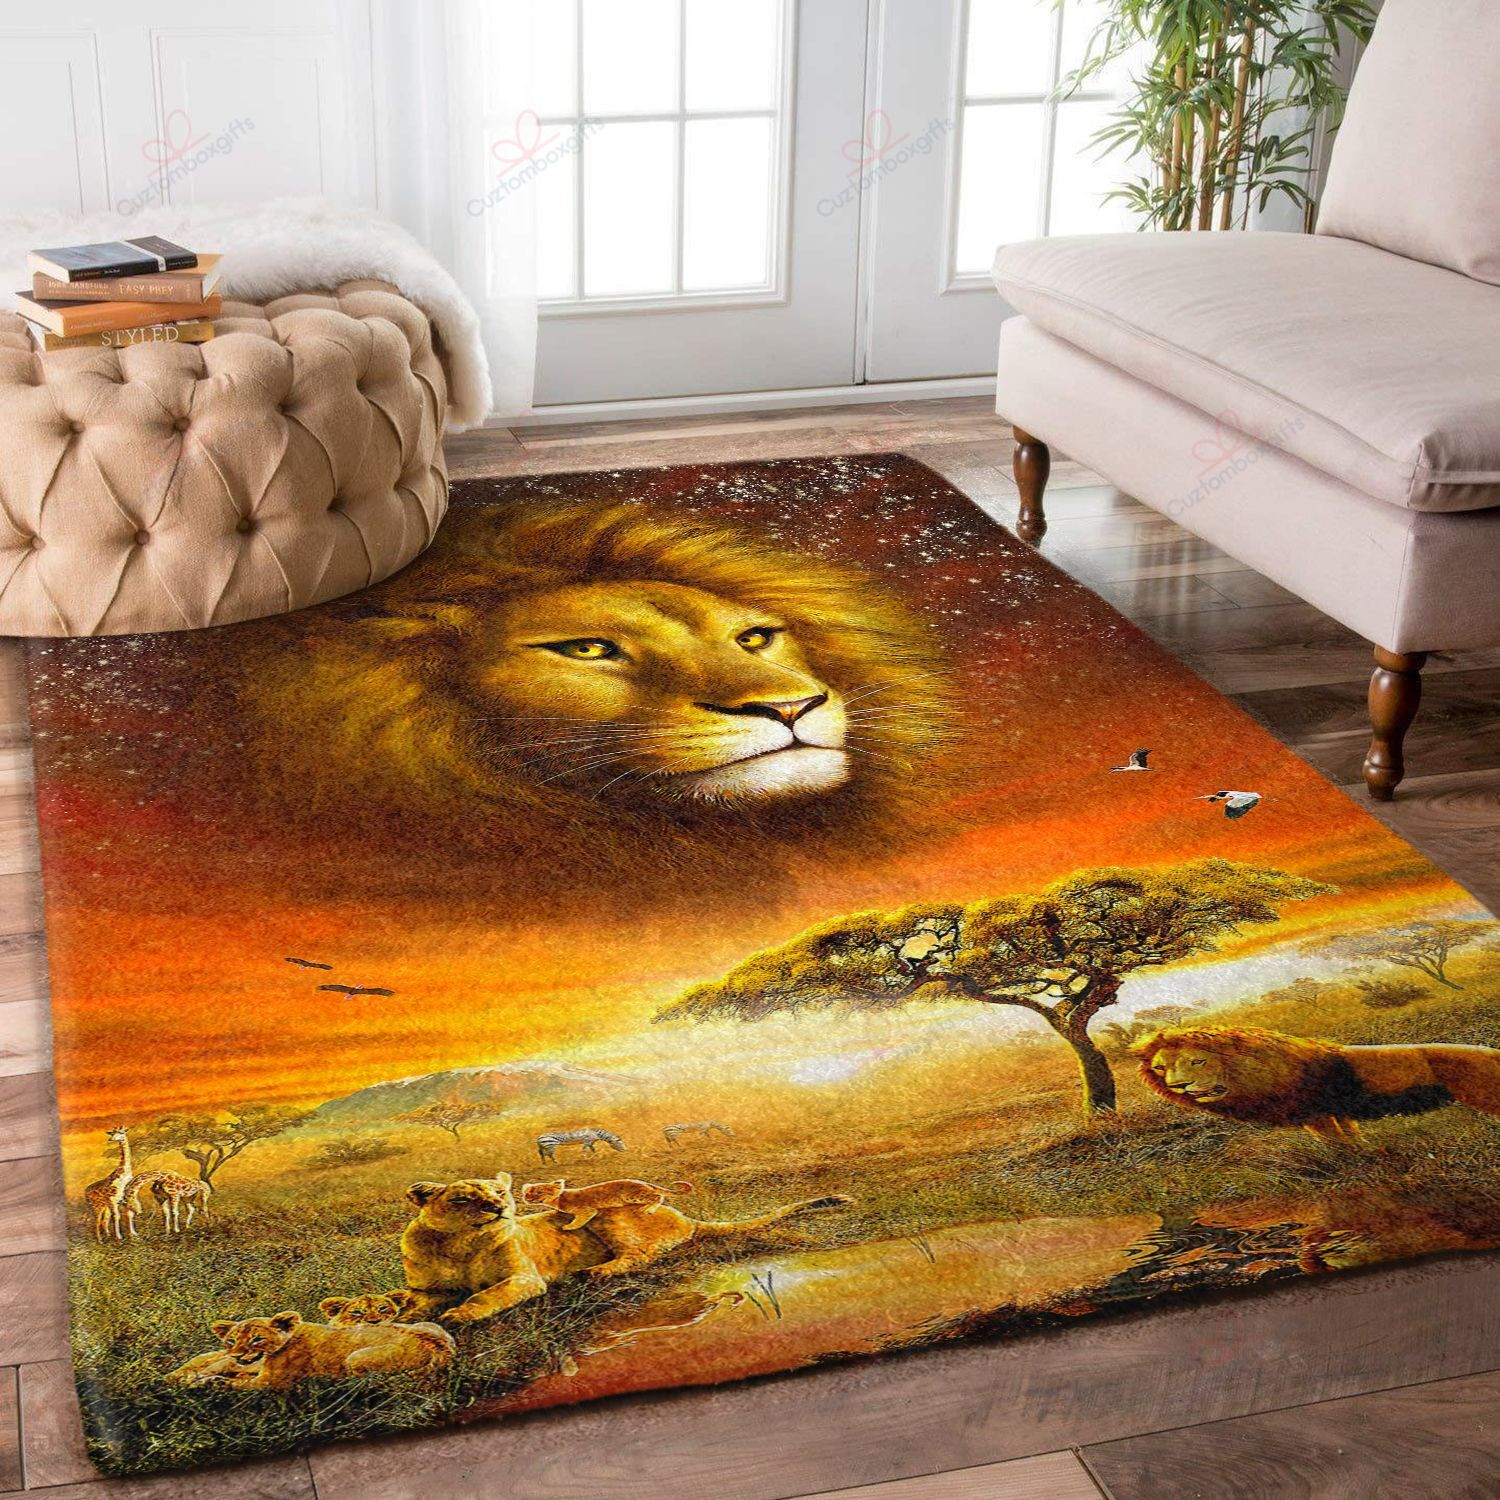 Safari Rugs Living Room
 African Lion In Safari Gs 0206vb Rug Sport Decor Gift